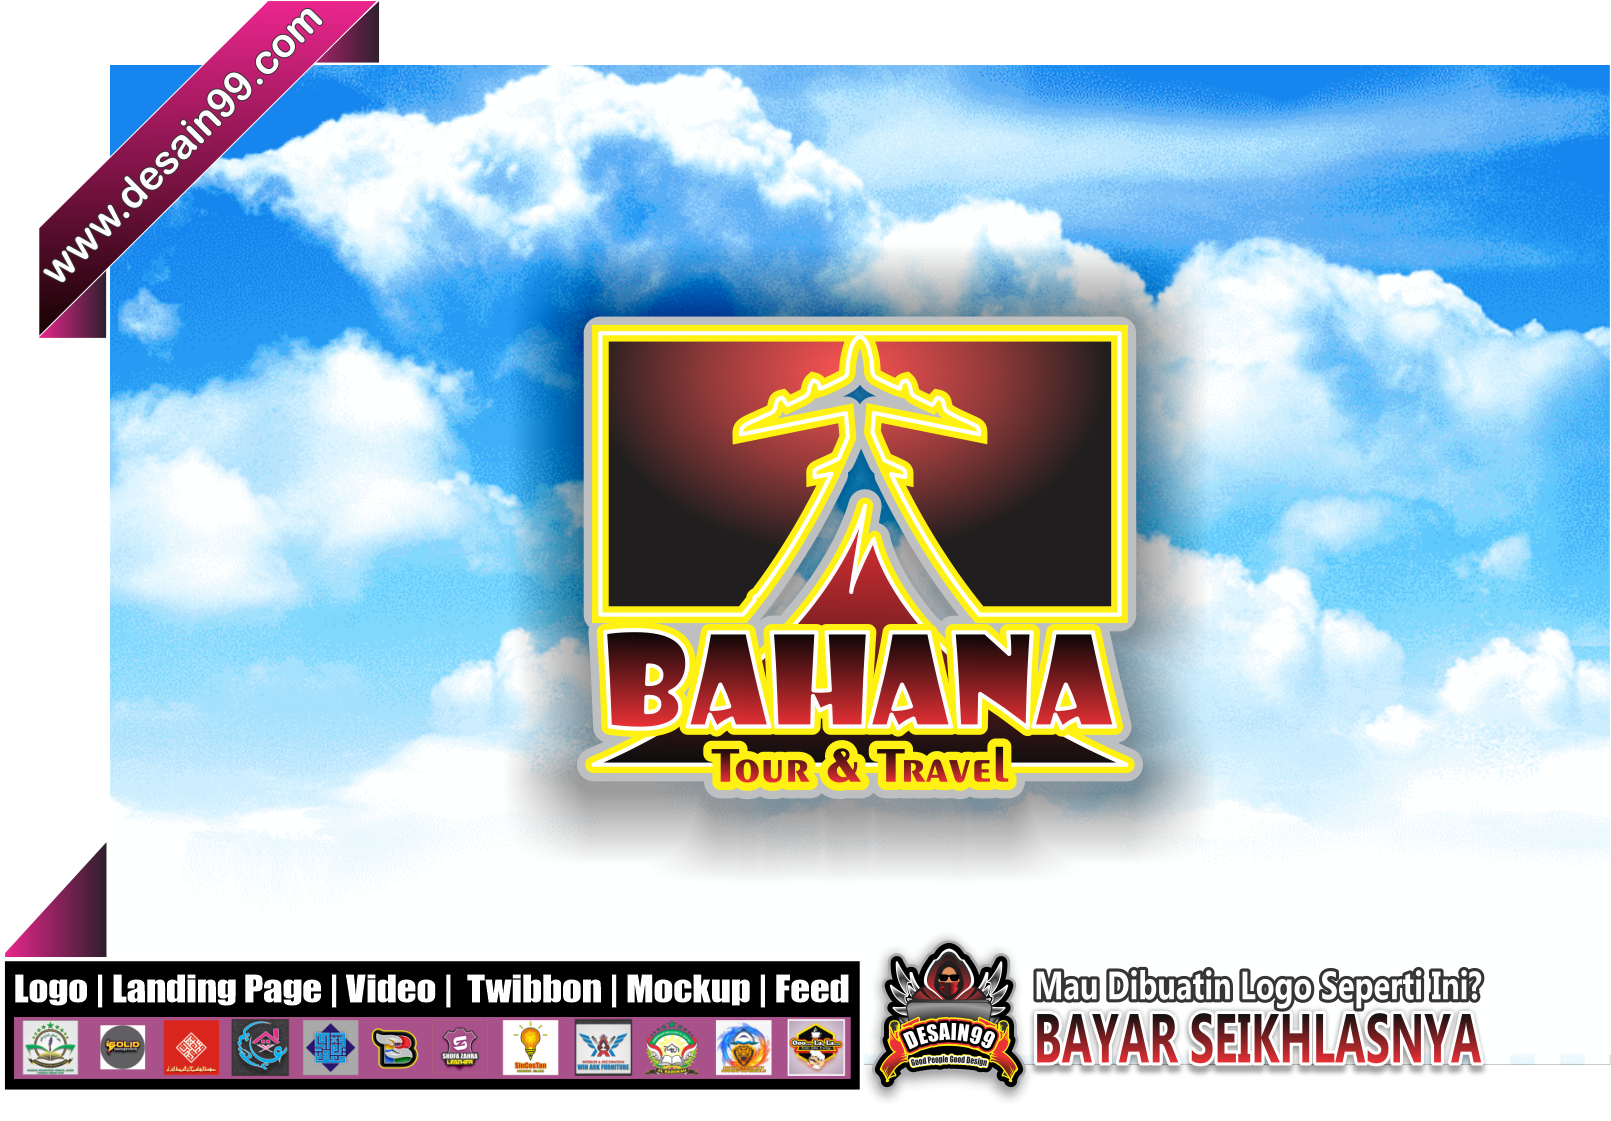 Gambar Desain Bahana Tour and Travel by: desain99.com | Jasa Desain Logo Bayar Seikhlasnya